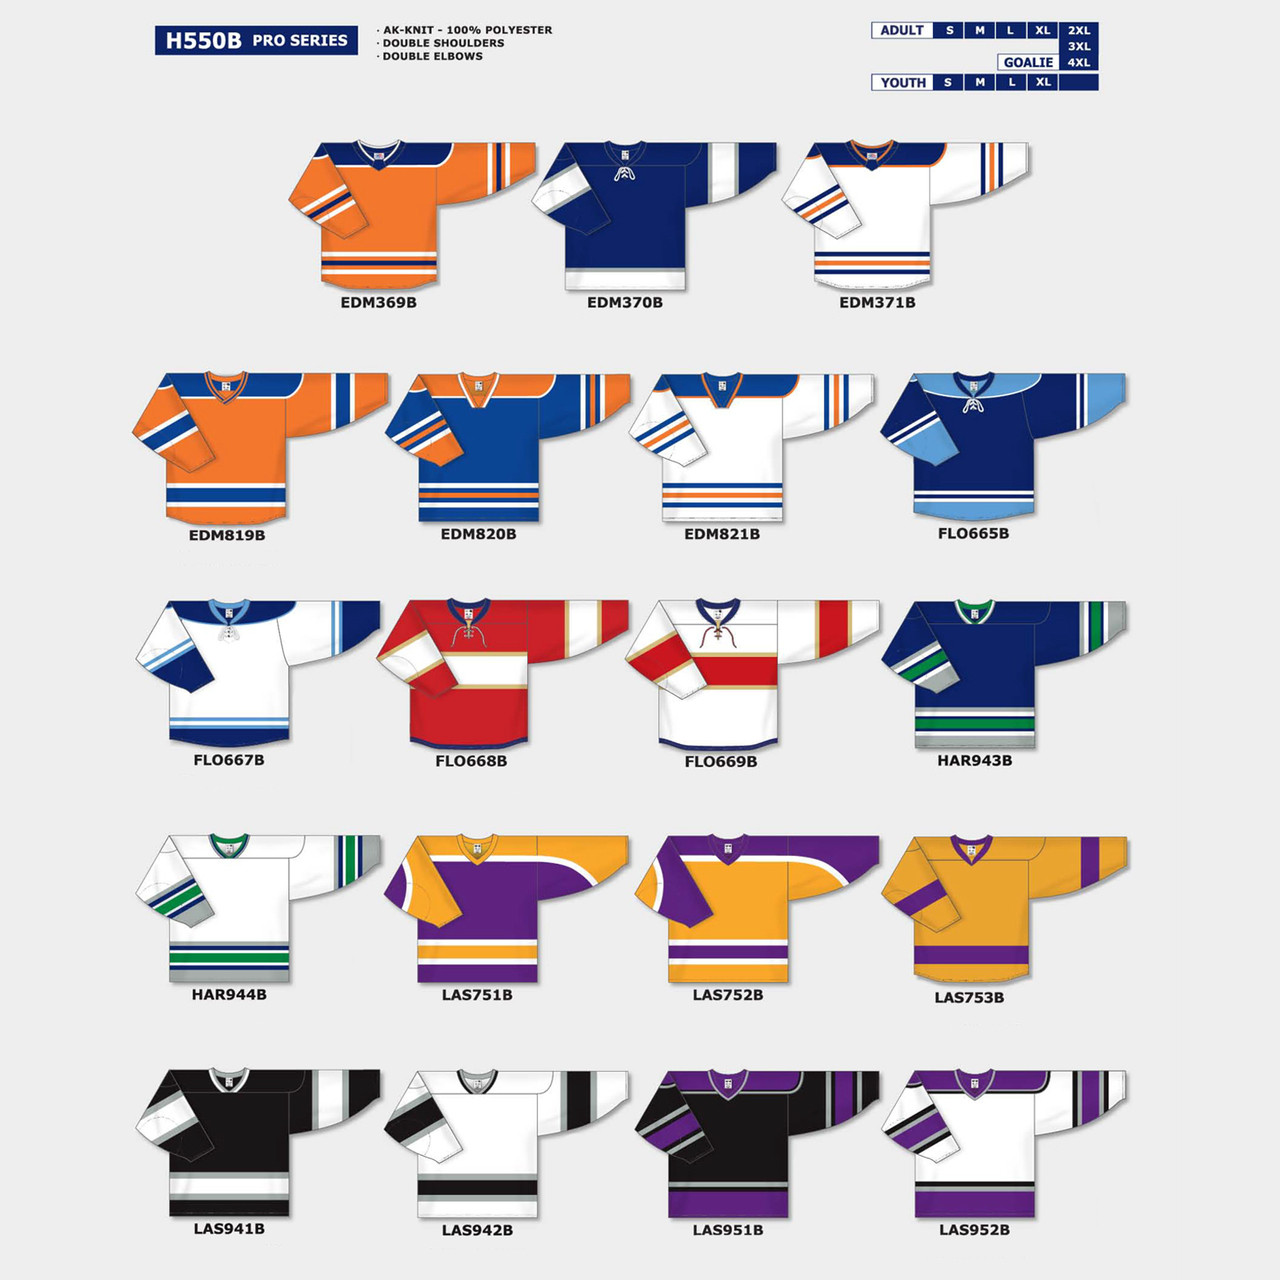 Athletic Knit H550B-2 Hockey Jerseys - Various Colors